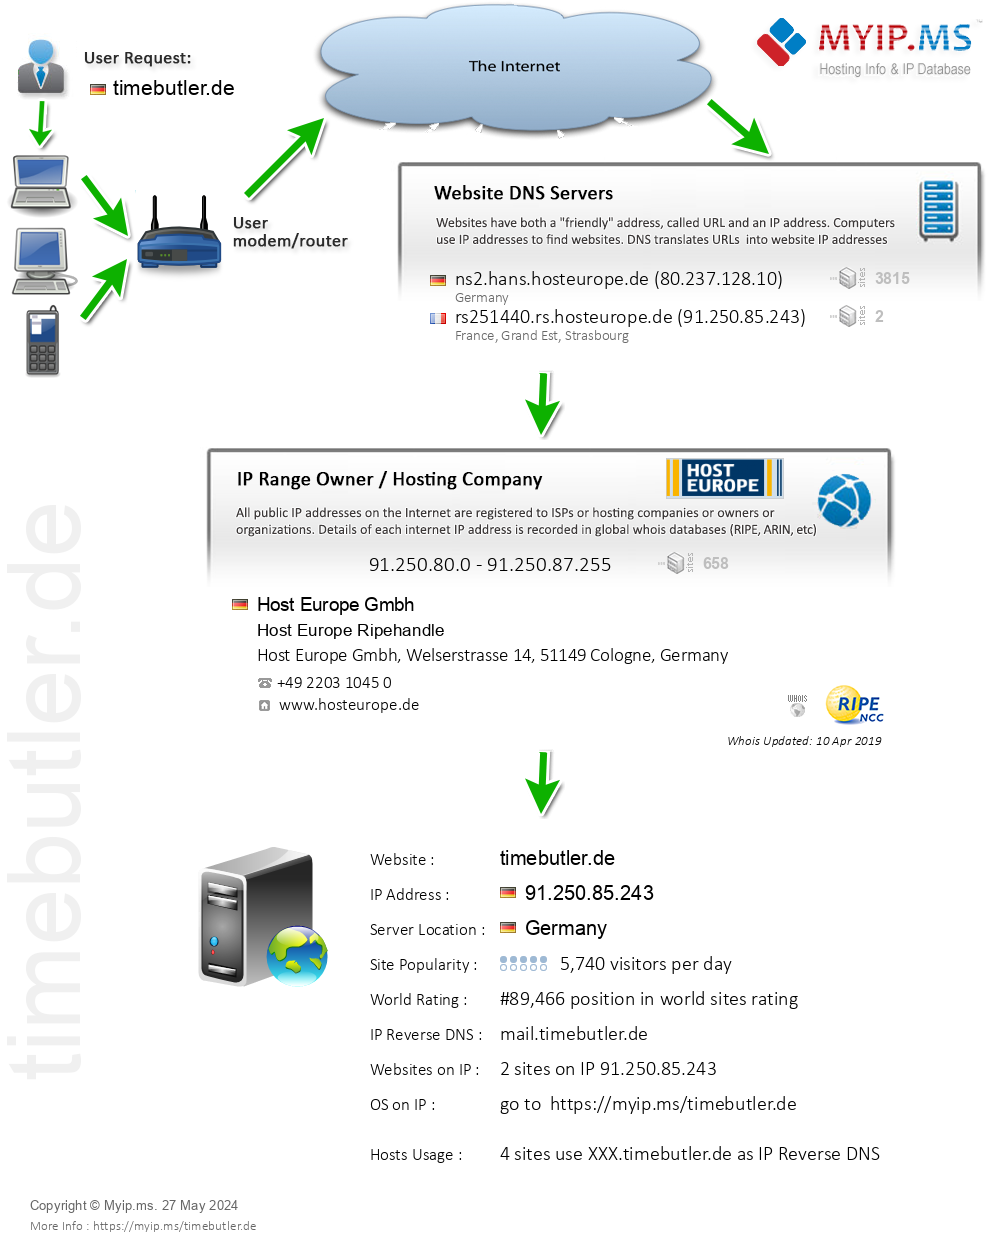 Timebutler.de - Website Hosting Visual IP Diagram